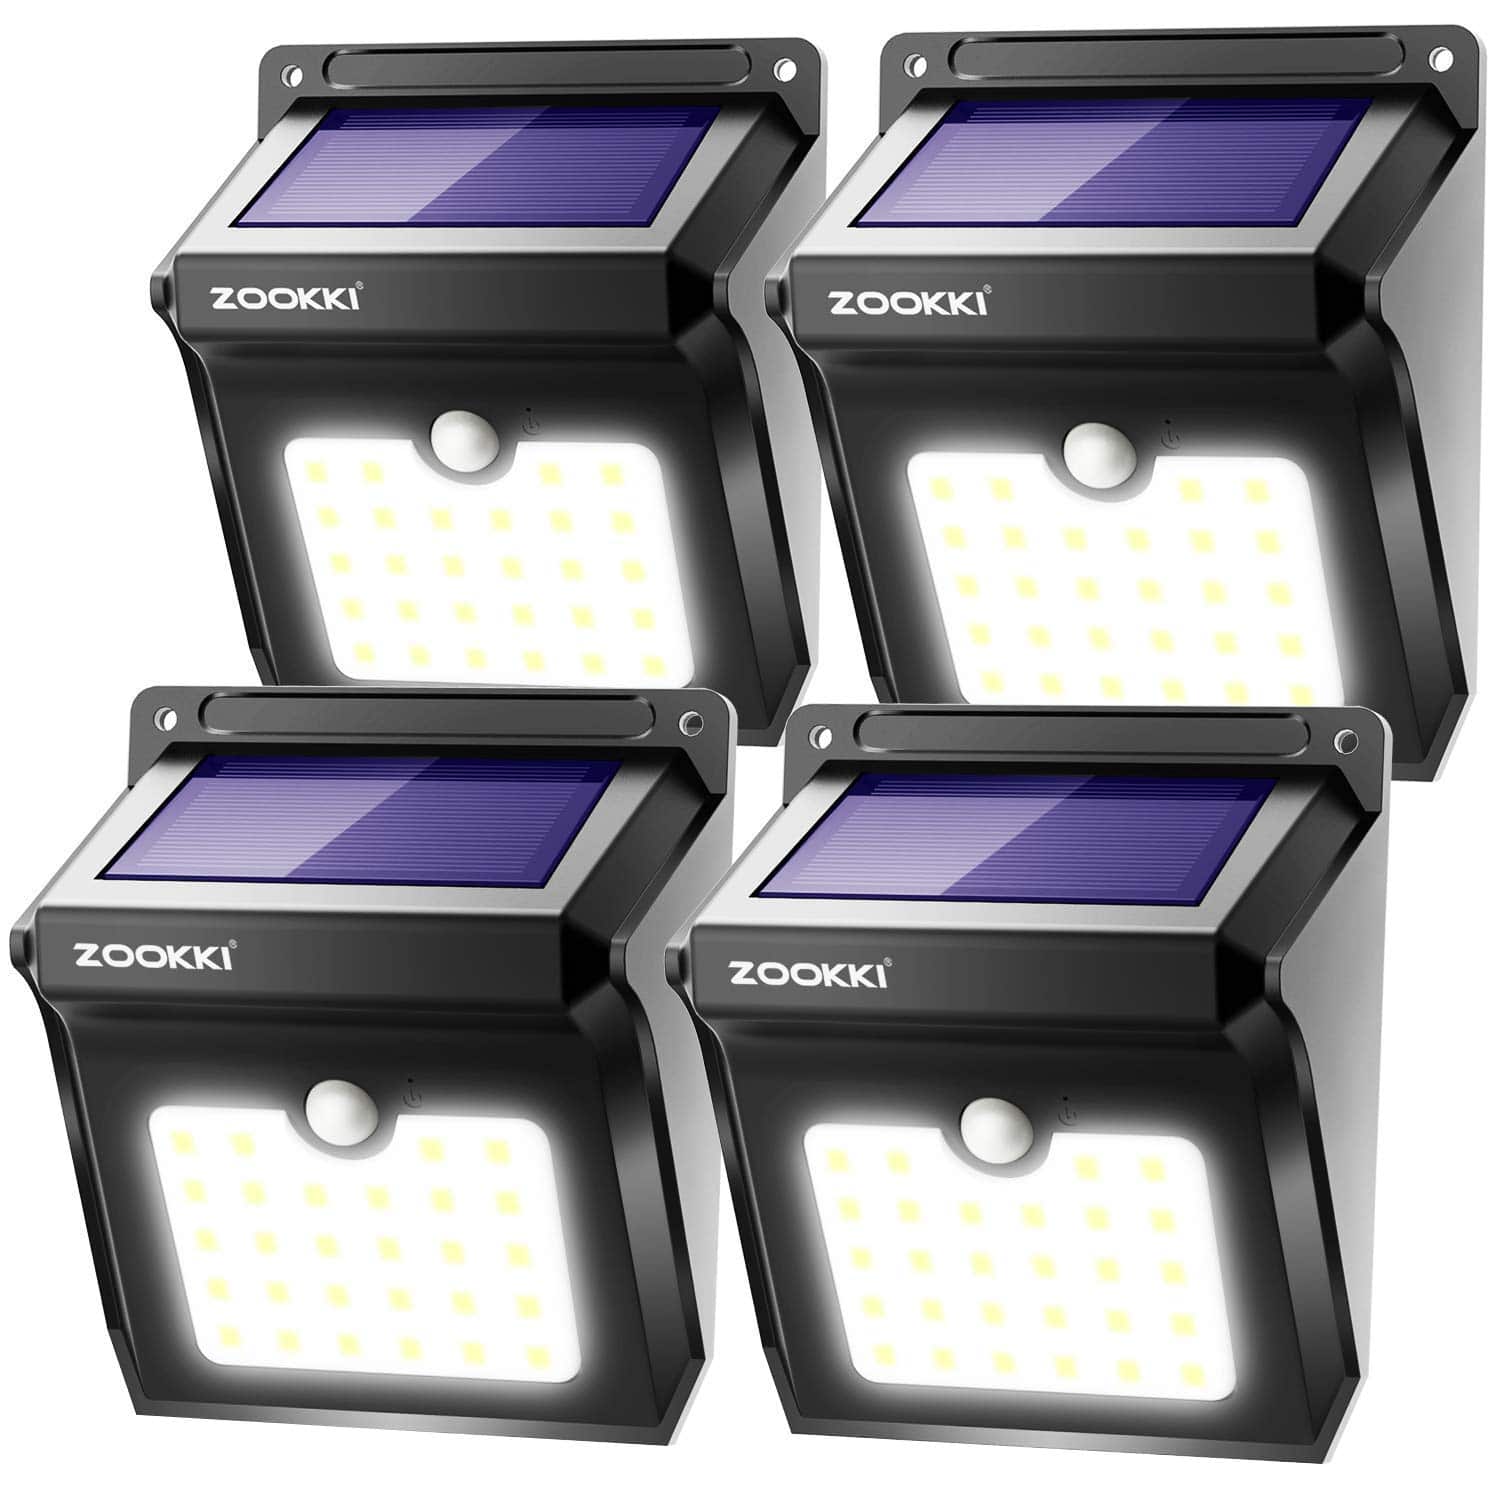 ZOOKKI Motion Sensor Lights